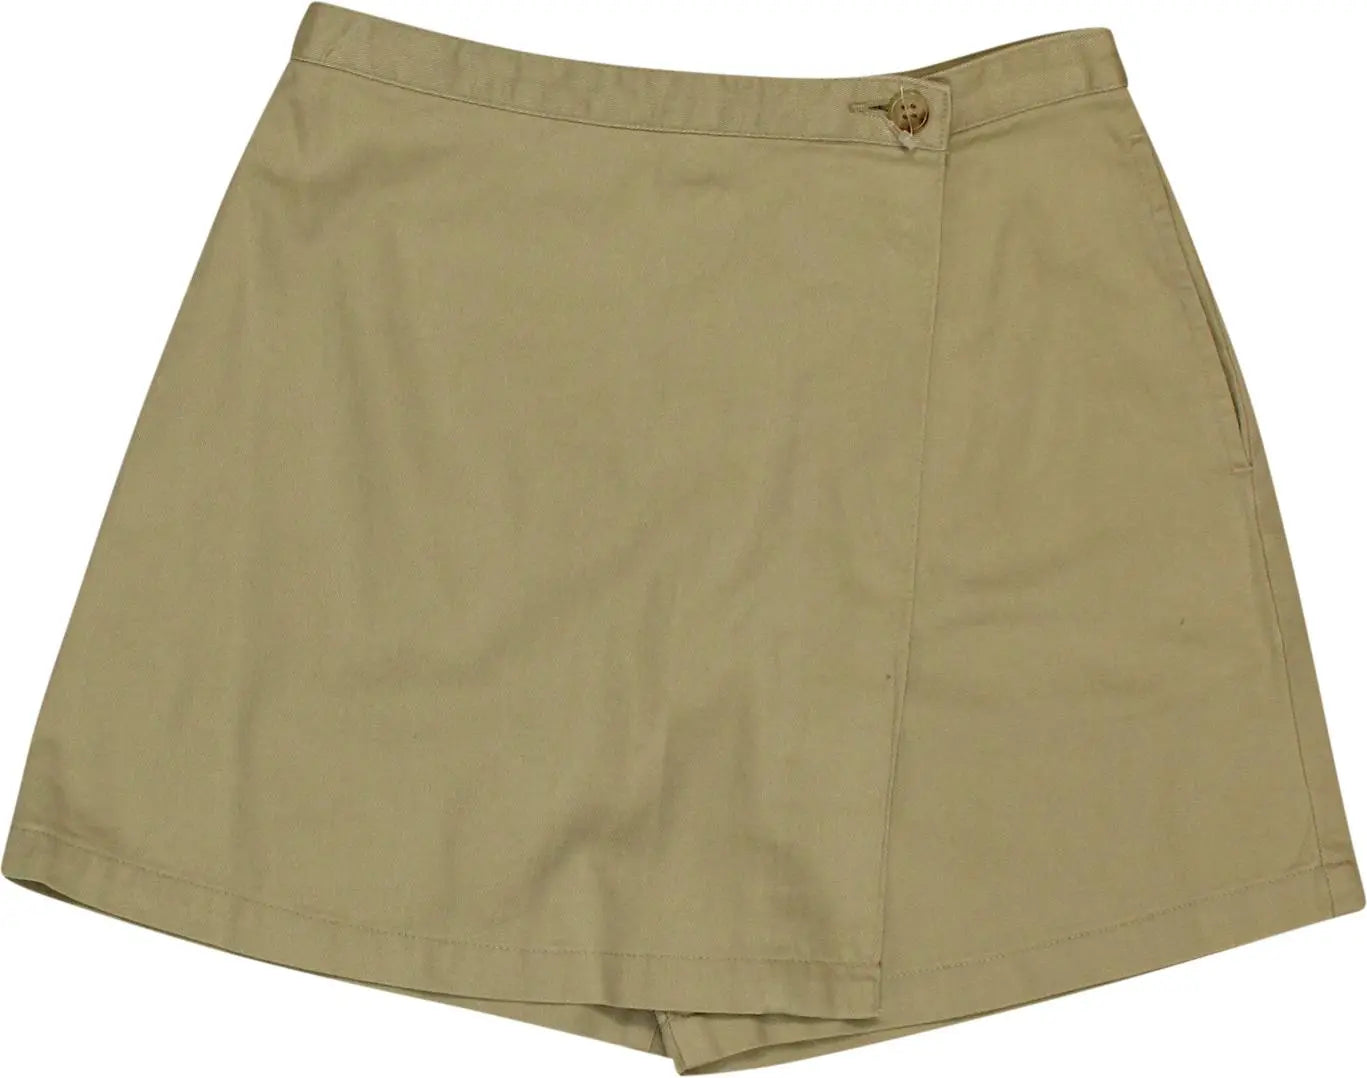 Ralph Lauren - Skirt/short- ThriftTale.com - Vintage and second handclothing